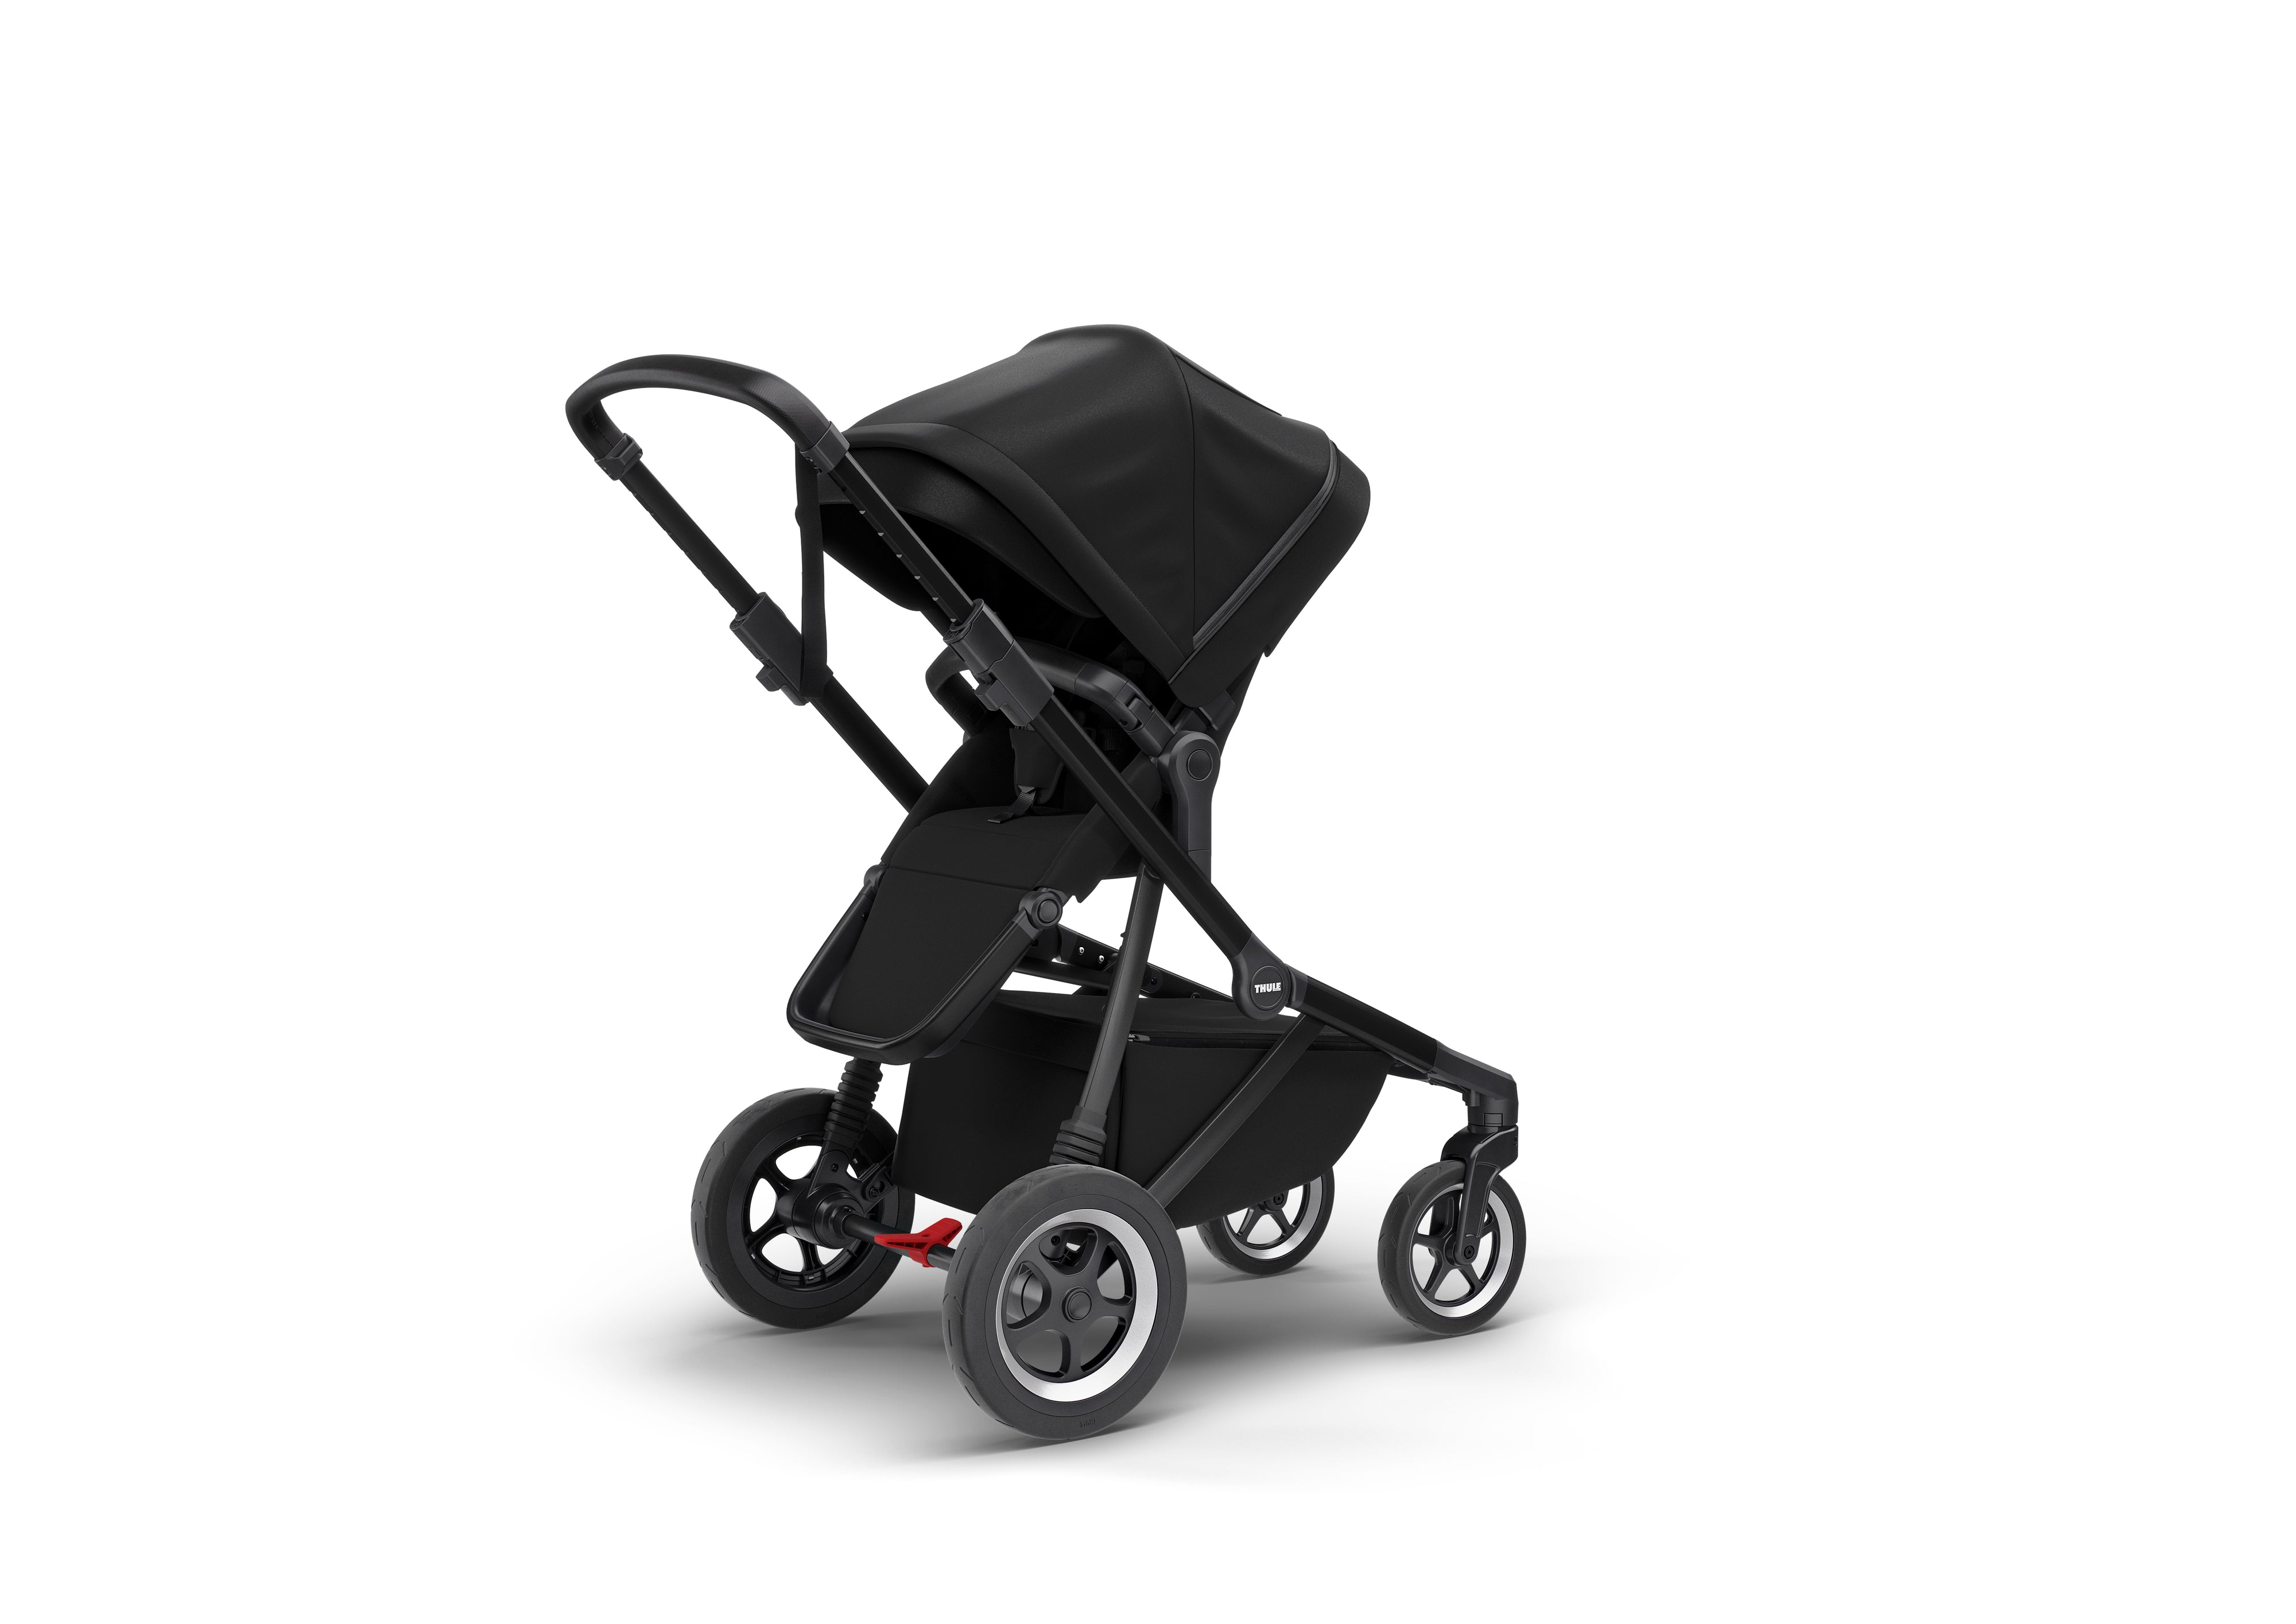 Thule Sleek Convertible Single to Double Urban Stroller Black Reversible seat